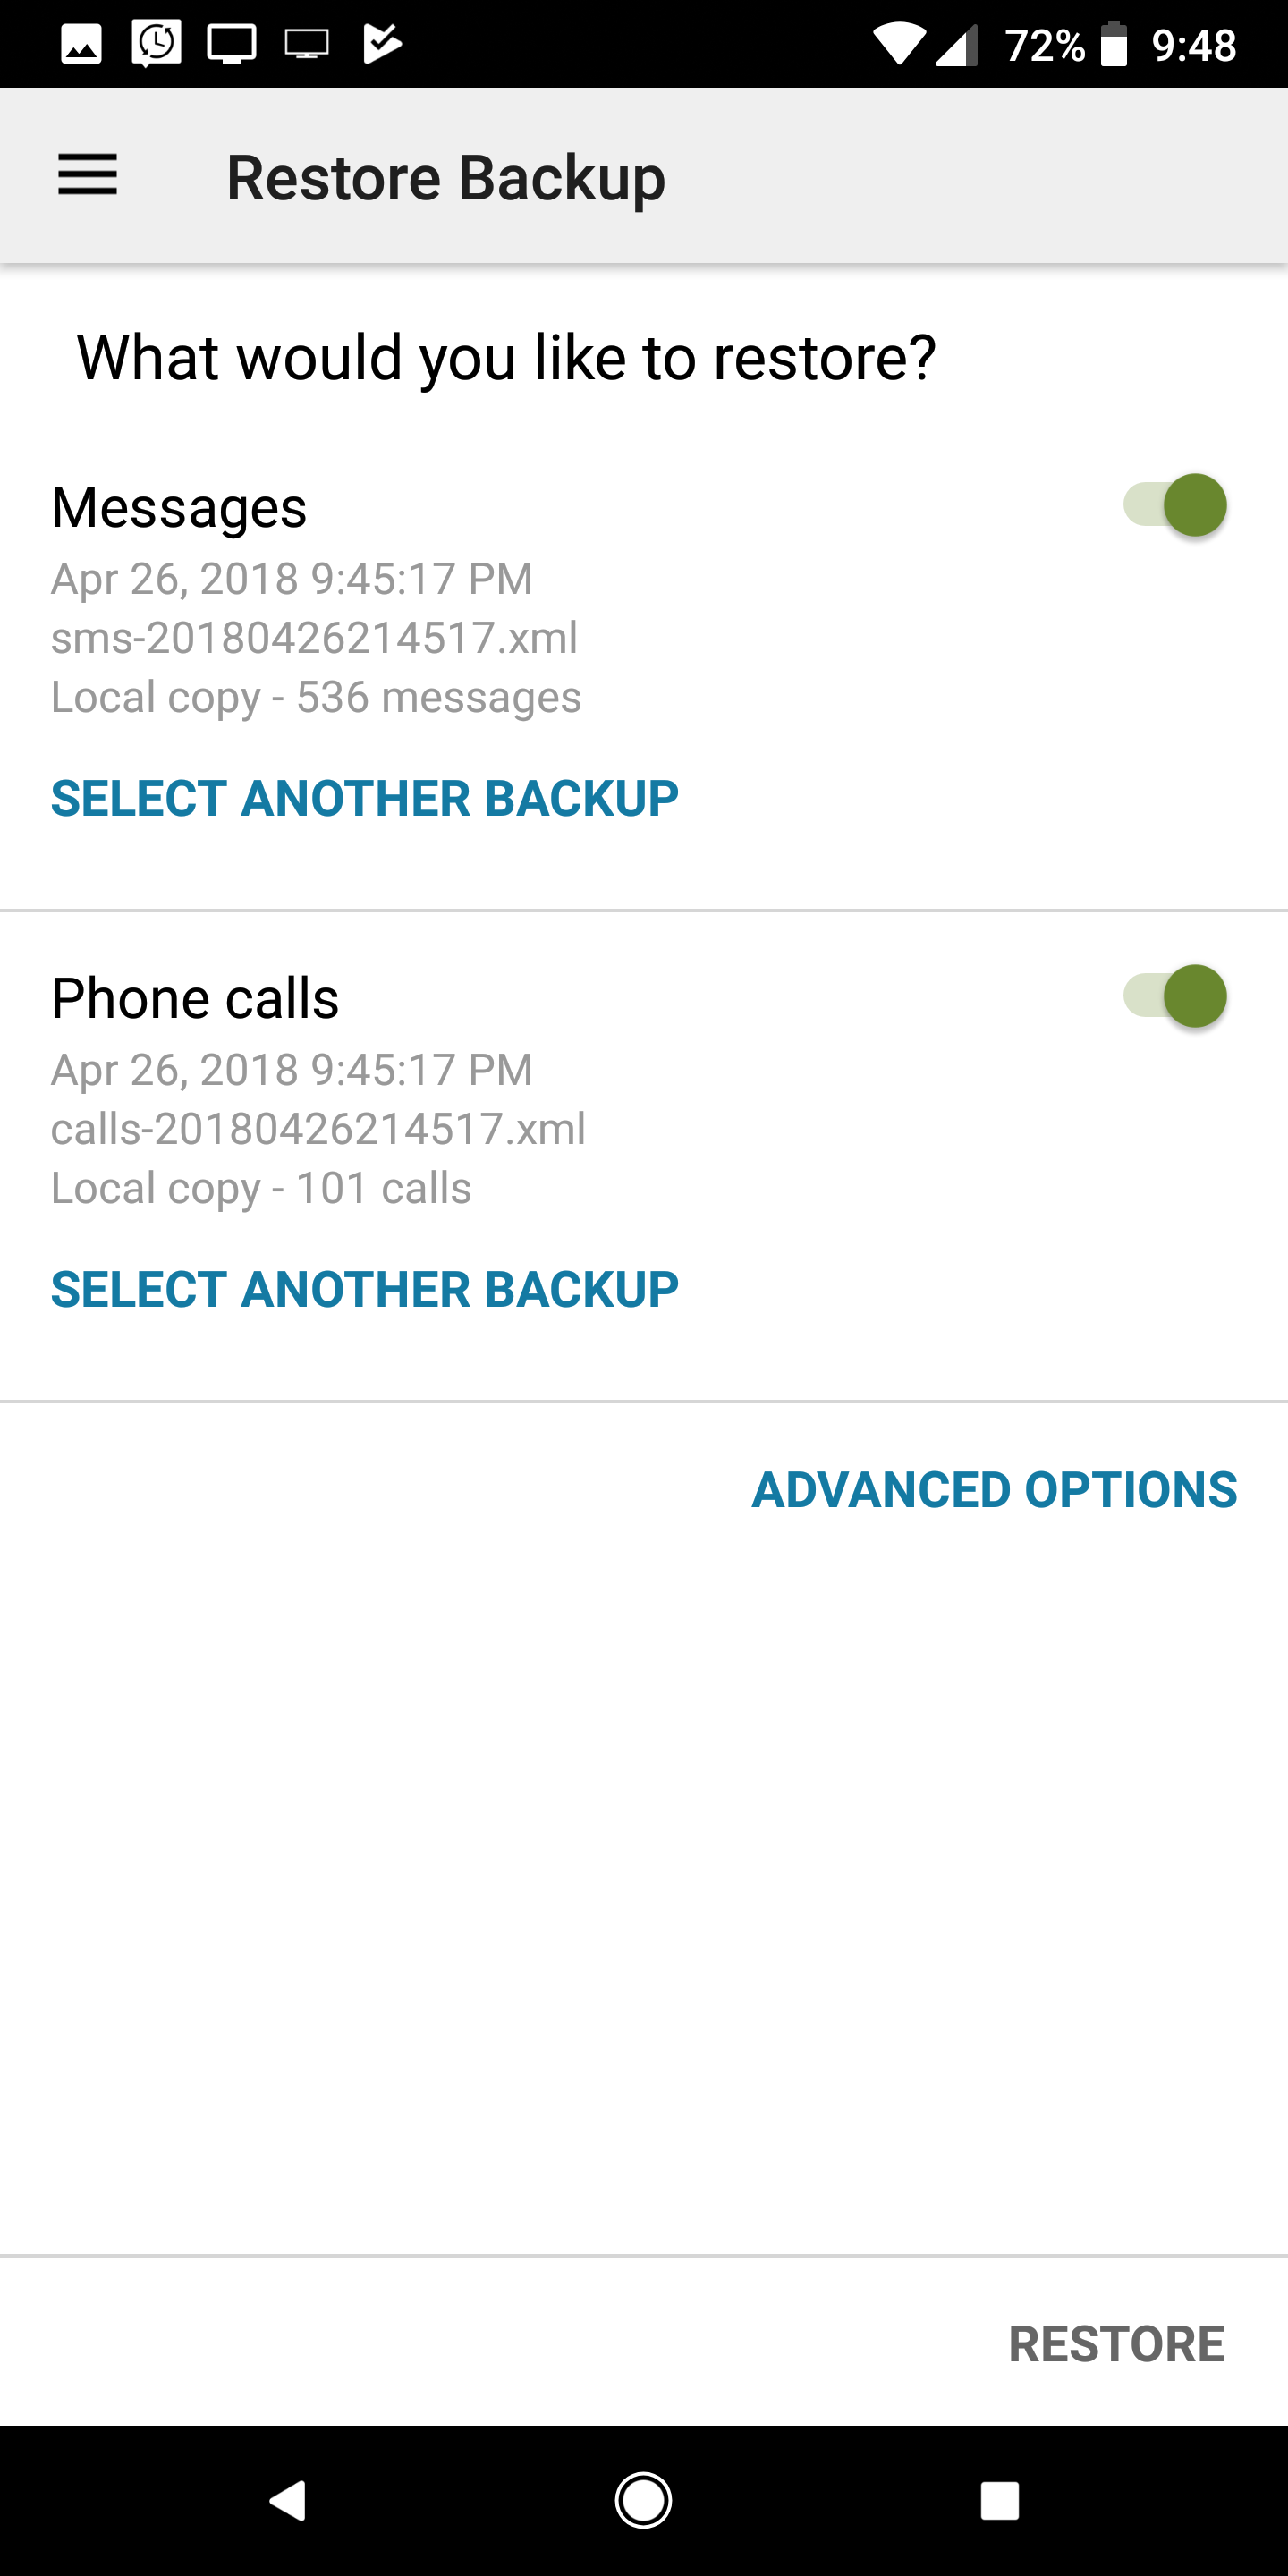 Screenshot shows restore options under Restore Backup.